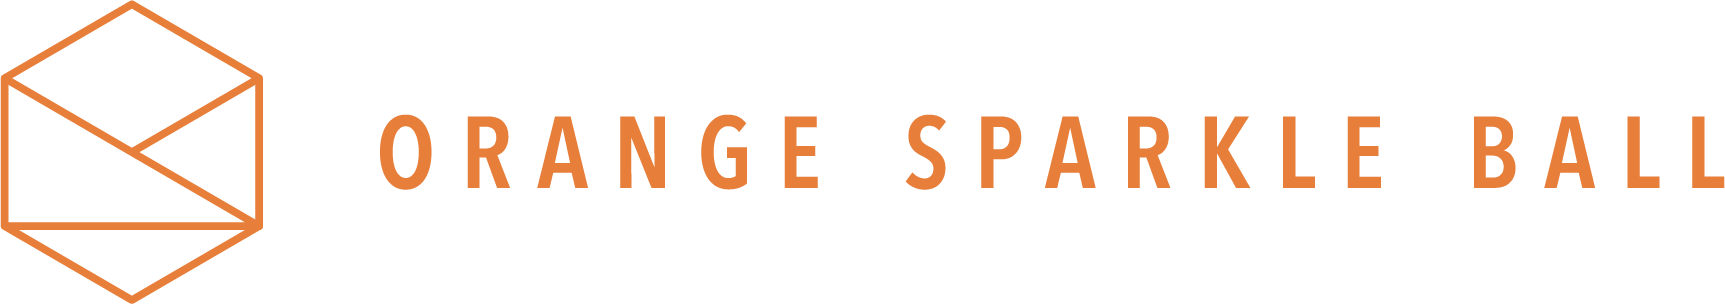 orangesparkleball Logo